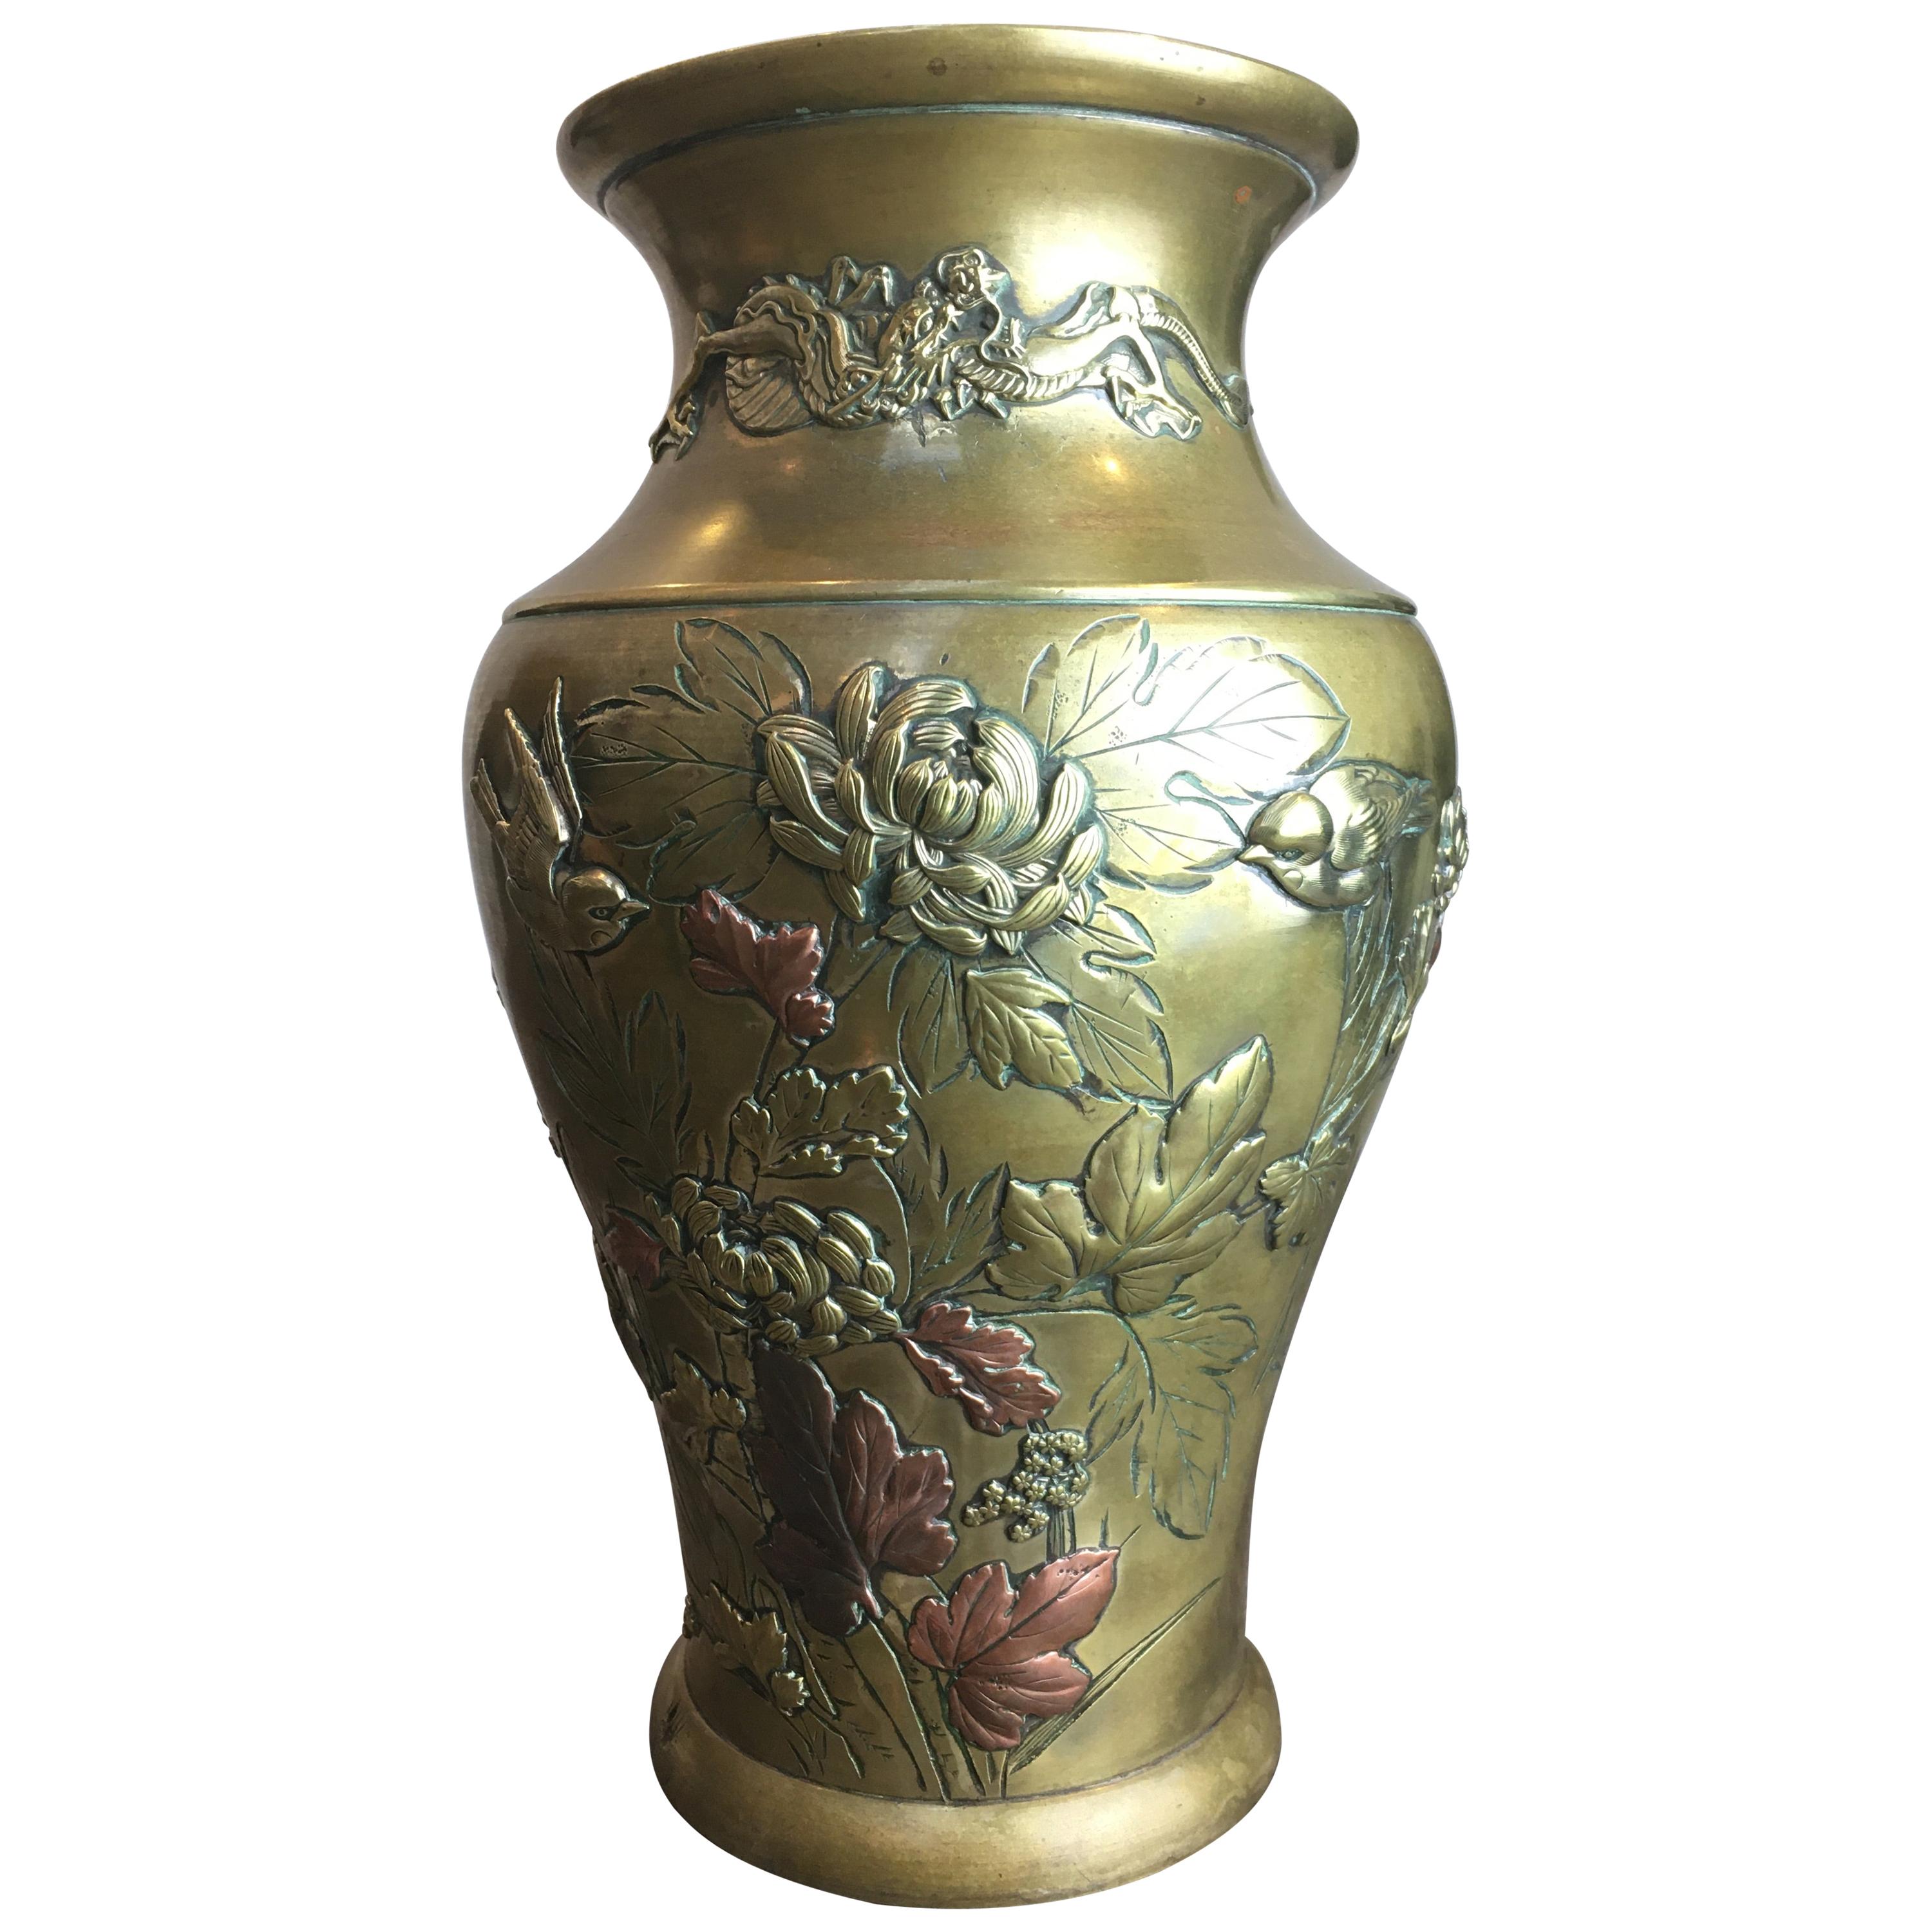 Japanese Meiji Period Mixed Metal Vase of Birds and Flowers Ikebana, c. 1880